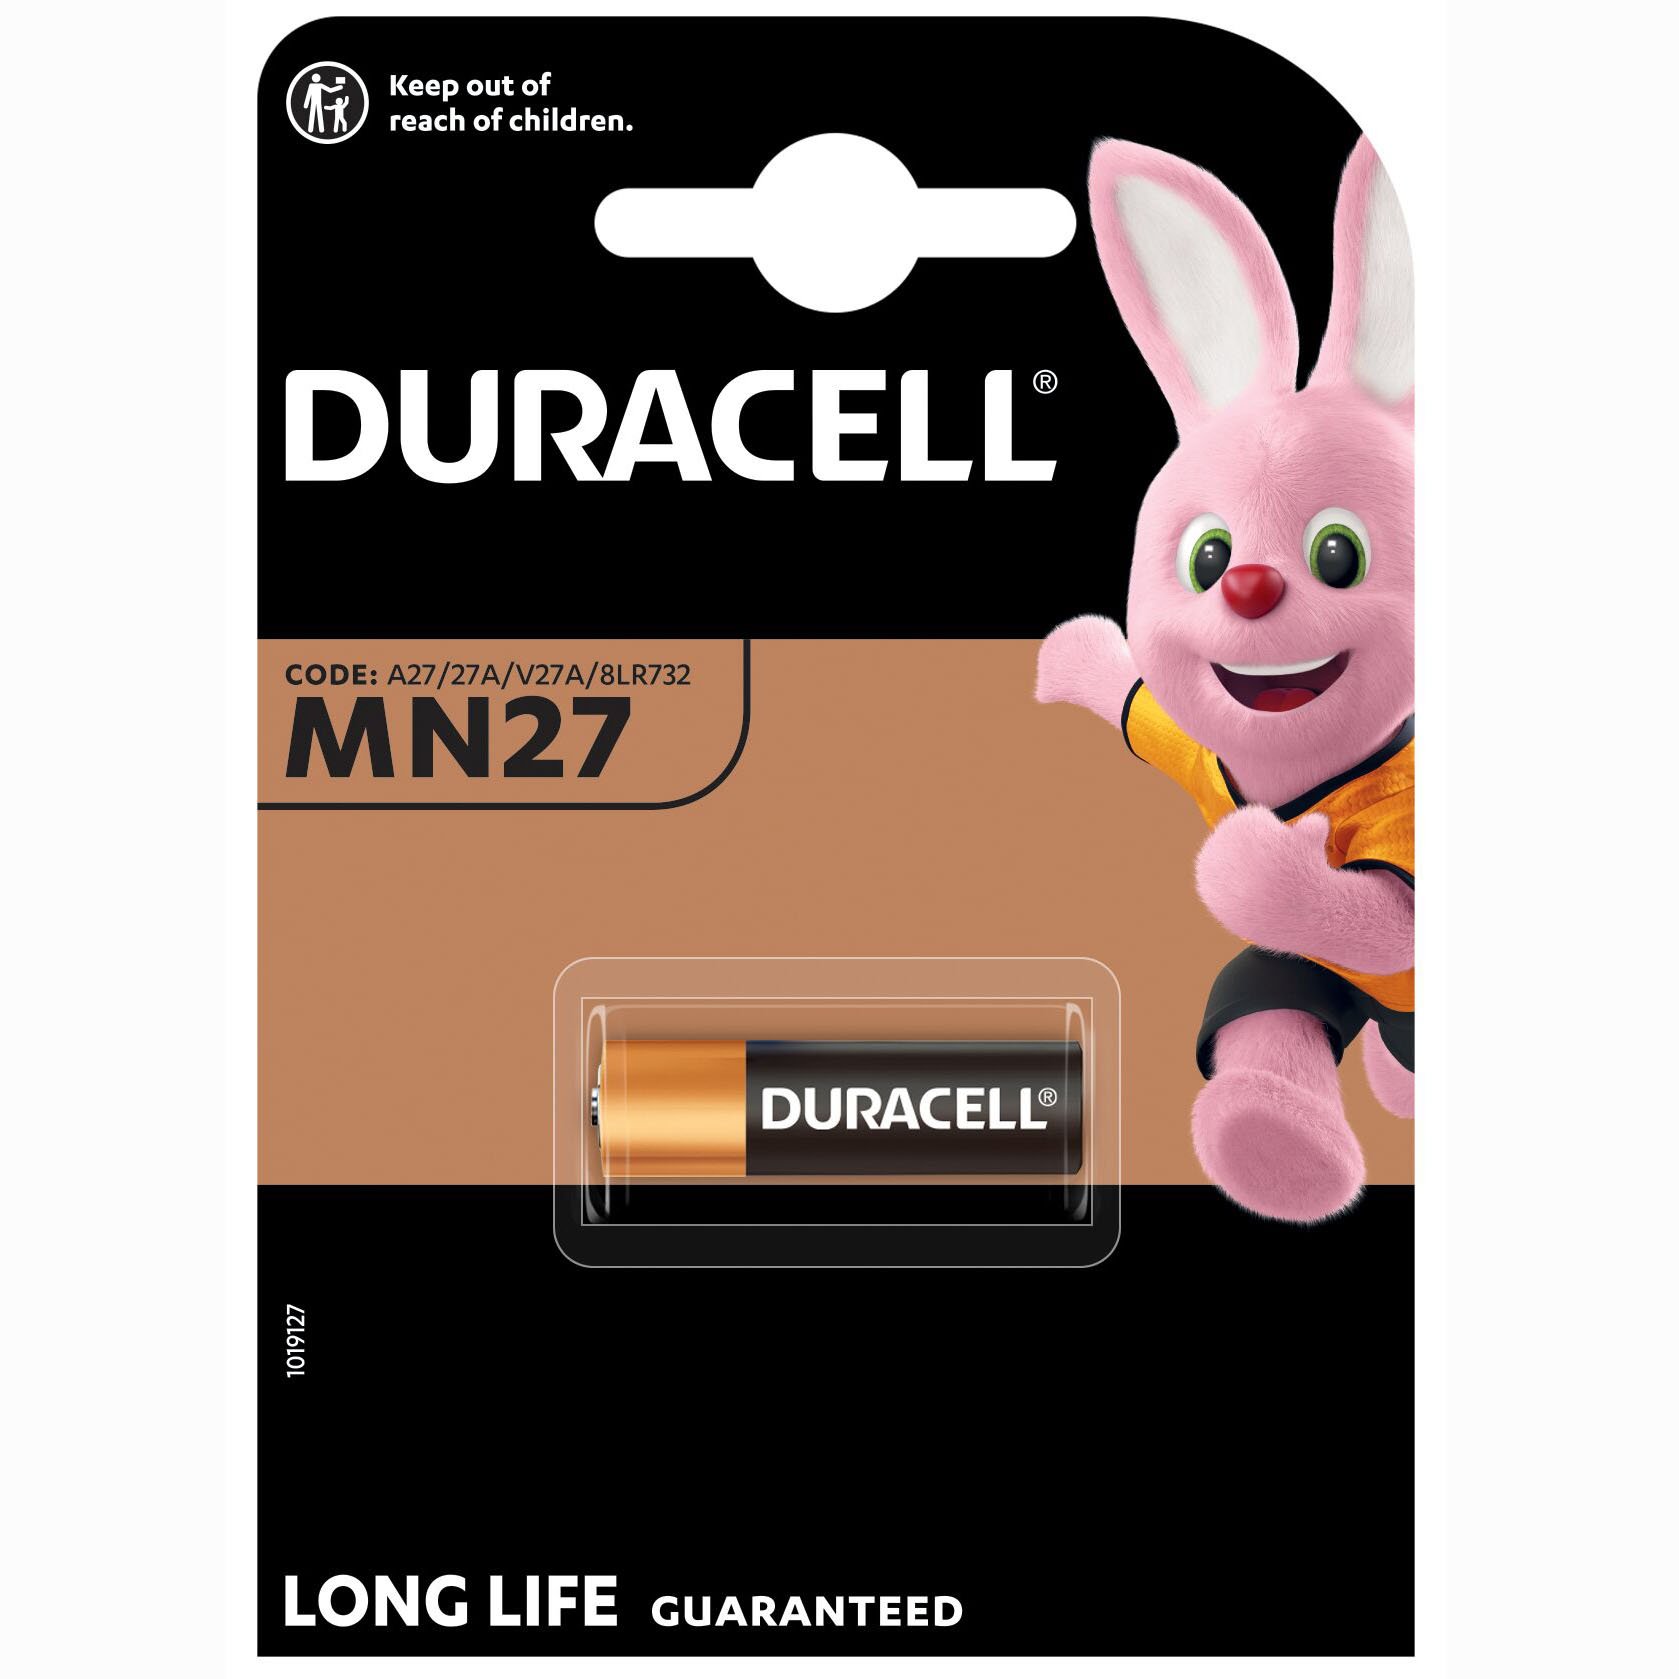 Спеціалізована лужна батарейка Duracell 12V MN27 A27/27A/V27A/8LR732 (706029) - фото 2